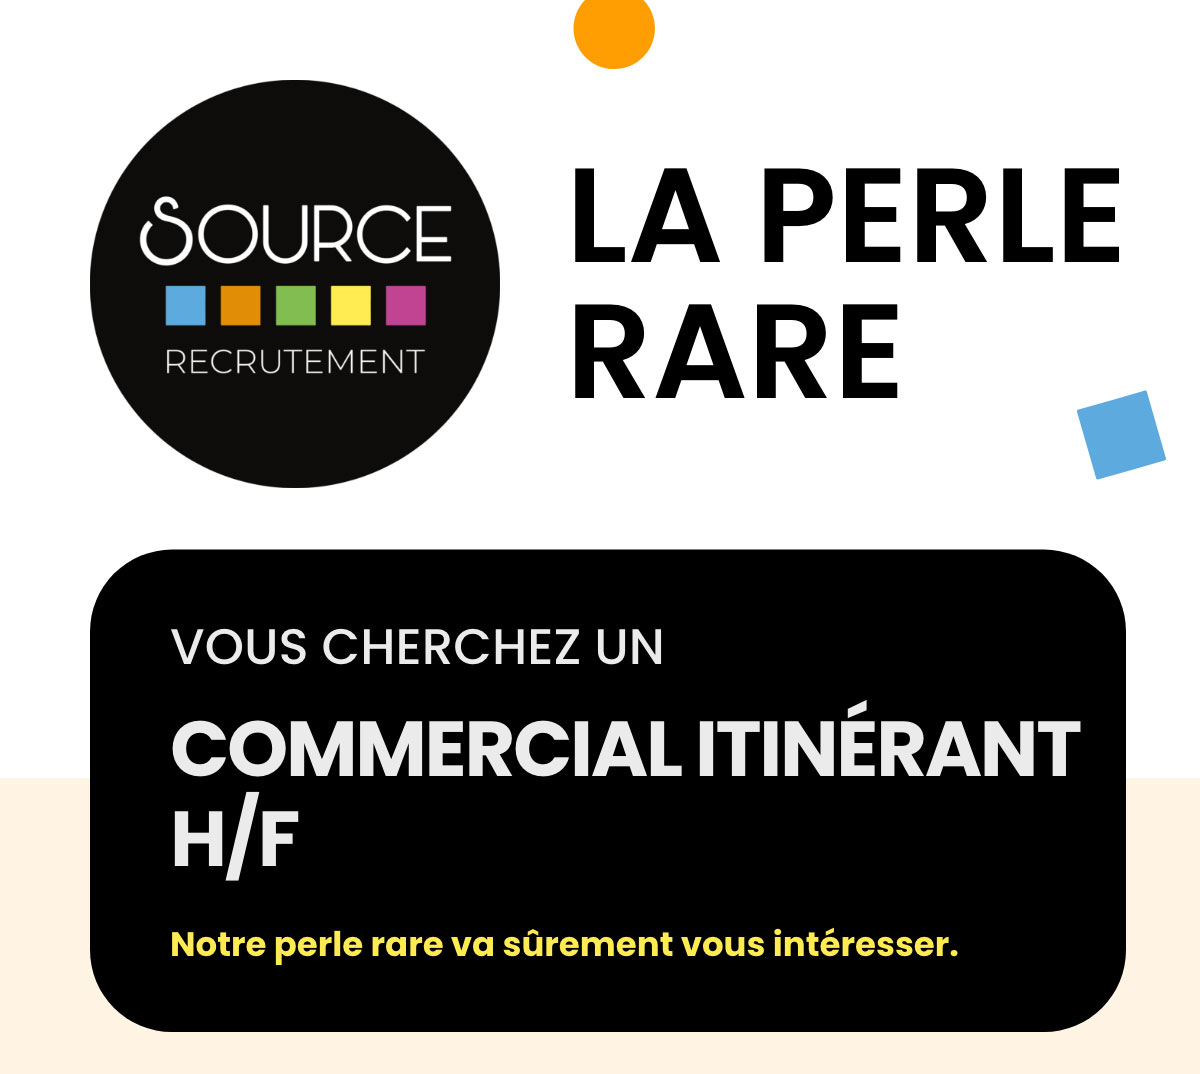 La Perle Rare : Commercial itinérant H/F